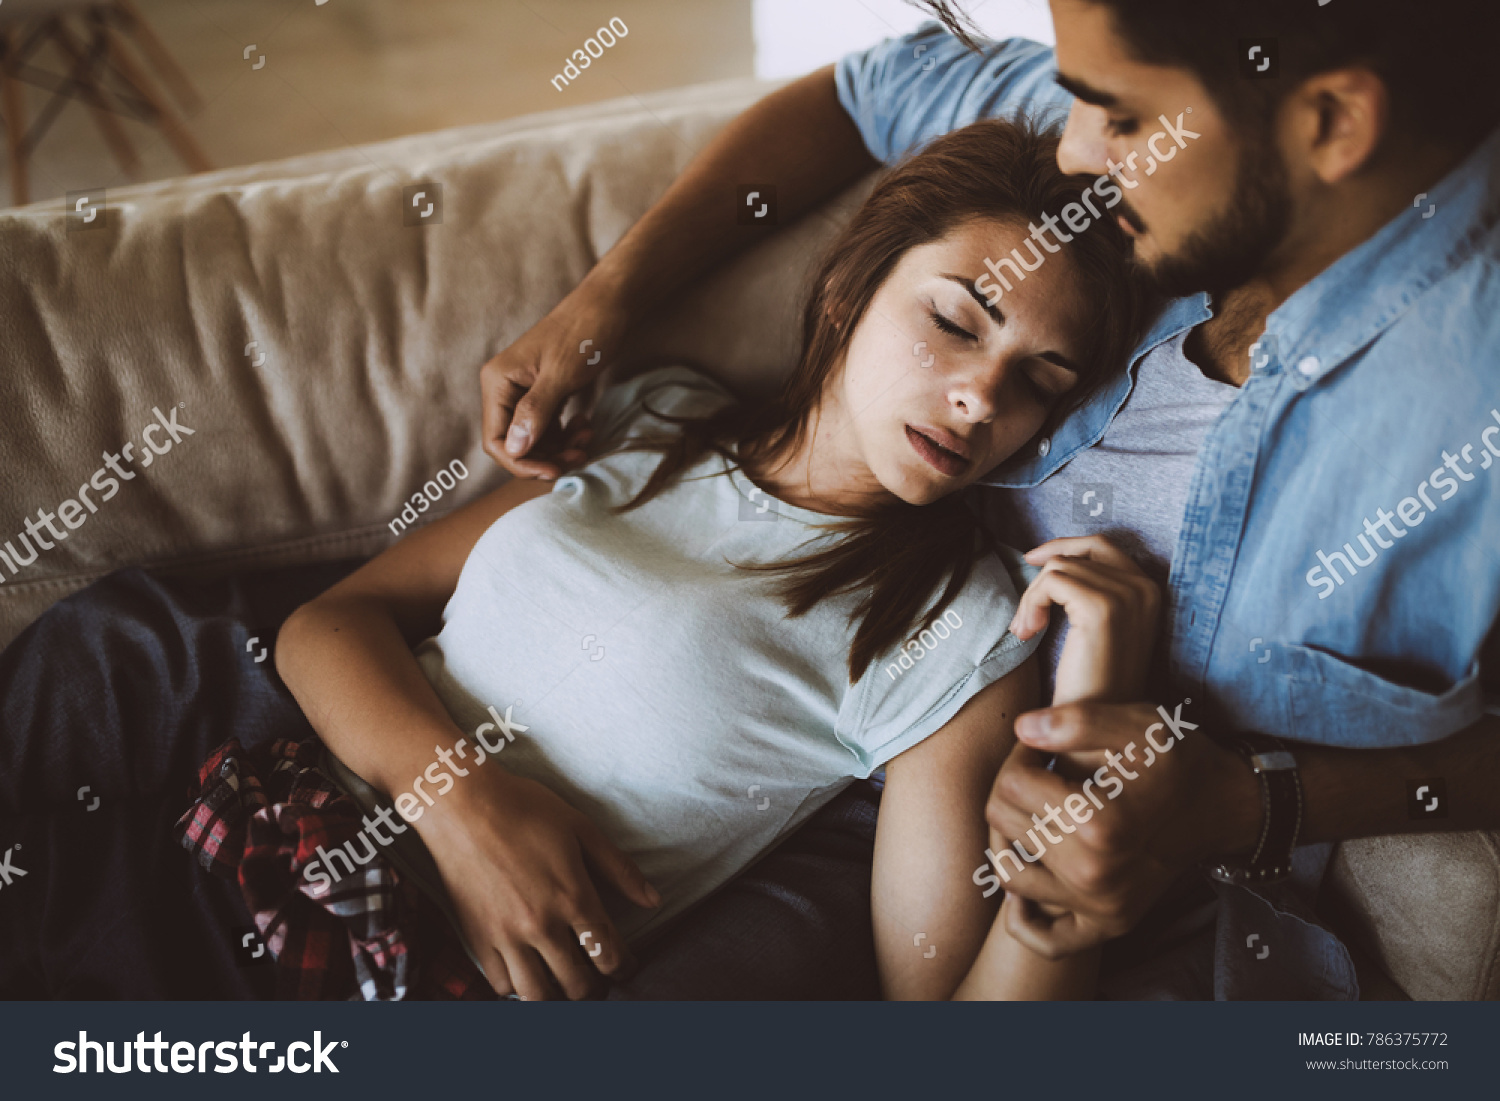 damien louis share boy lying on girls lap images photos